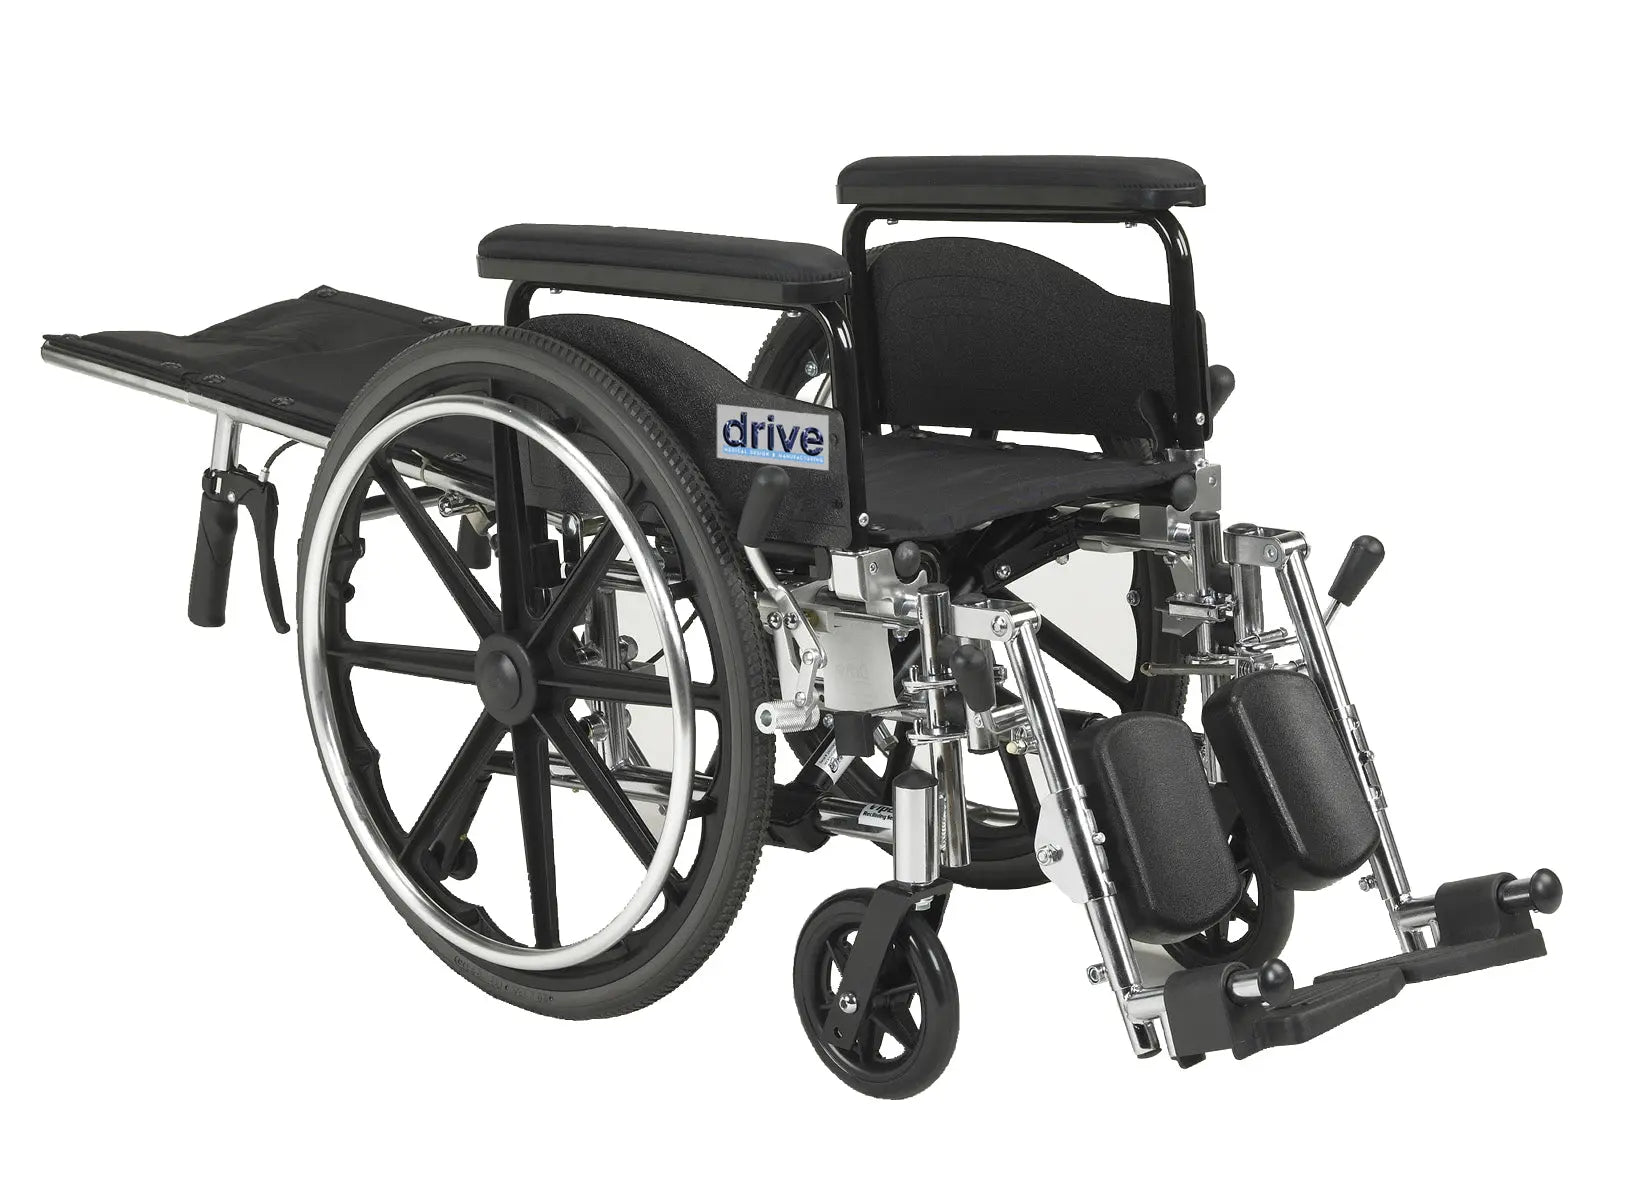 Viper Plus GT Full Reclining Wheelchair - Home Health Store Inc